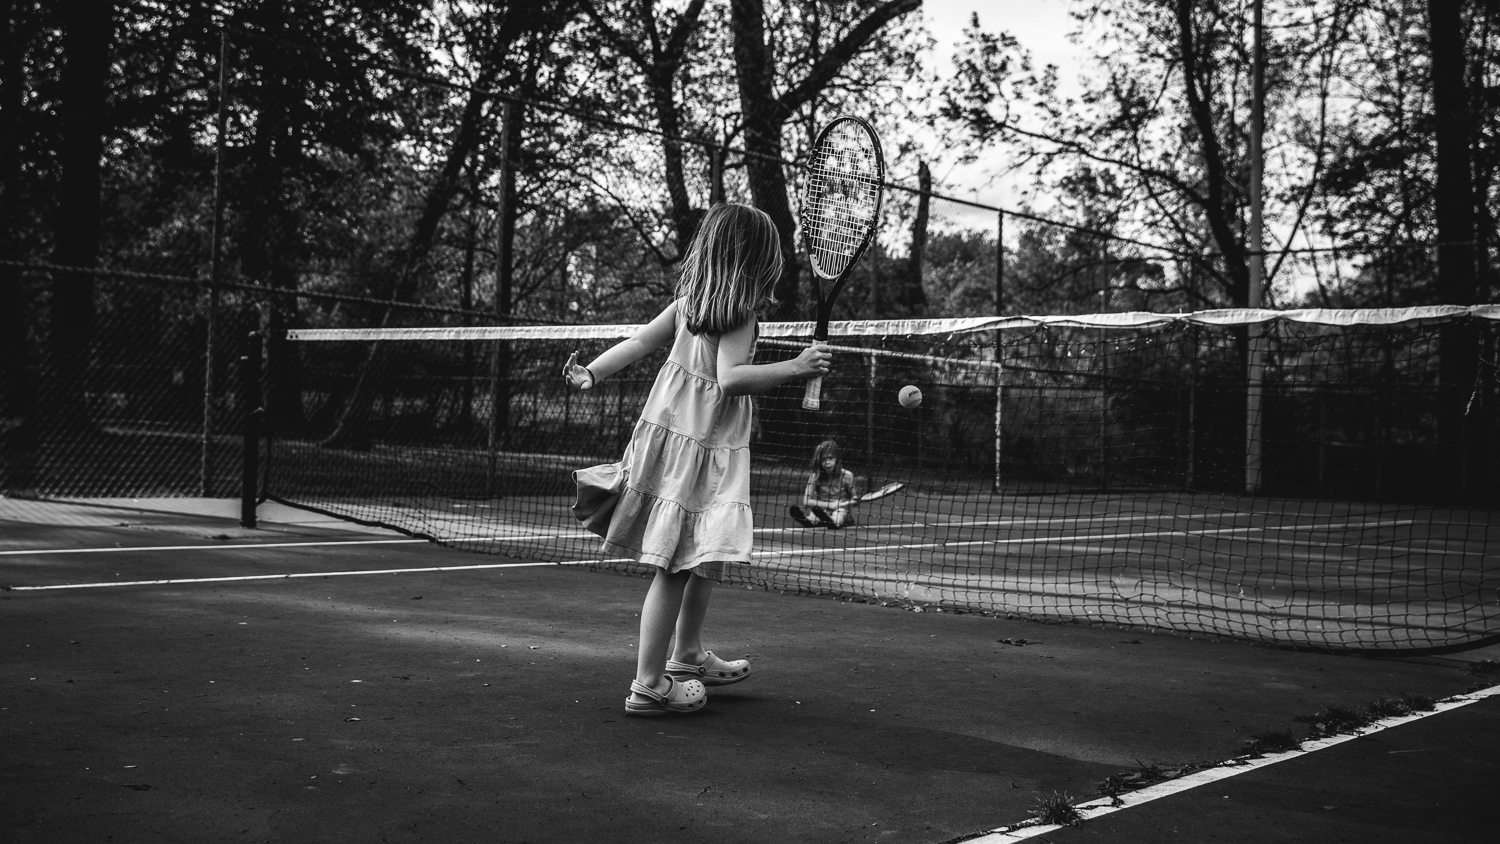 rebecca_wyatt_tennis_girls-2.jpg